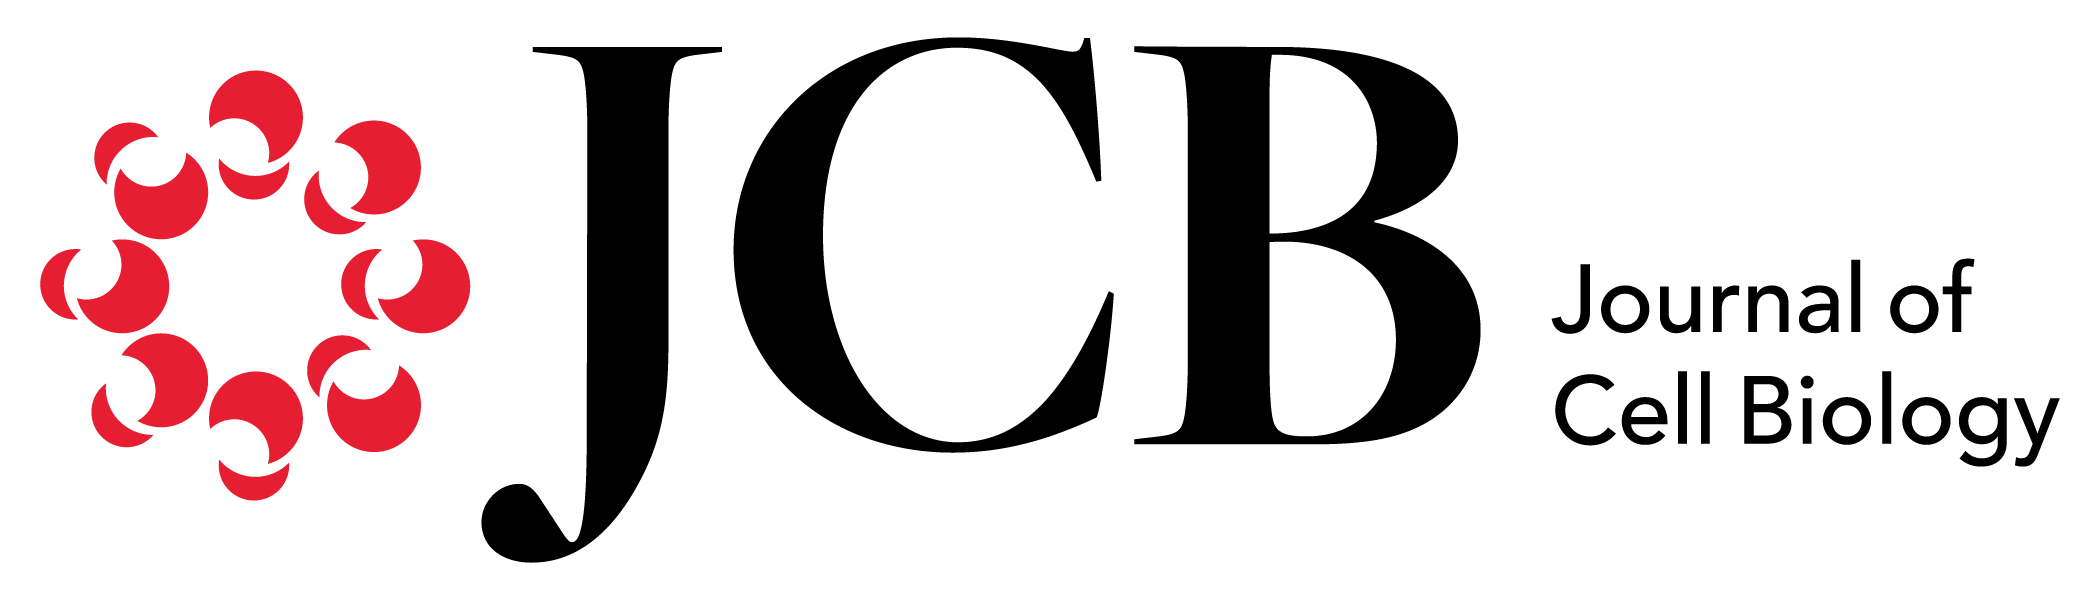 2019-04/jcb-logo.jpg